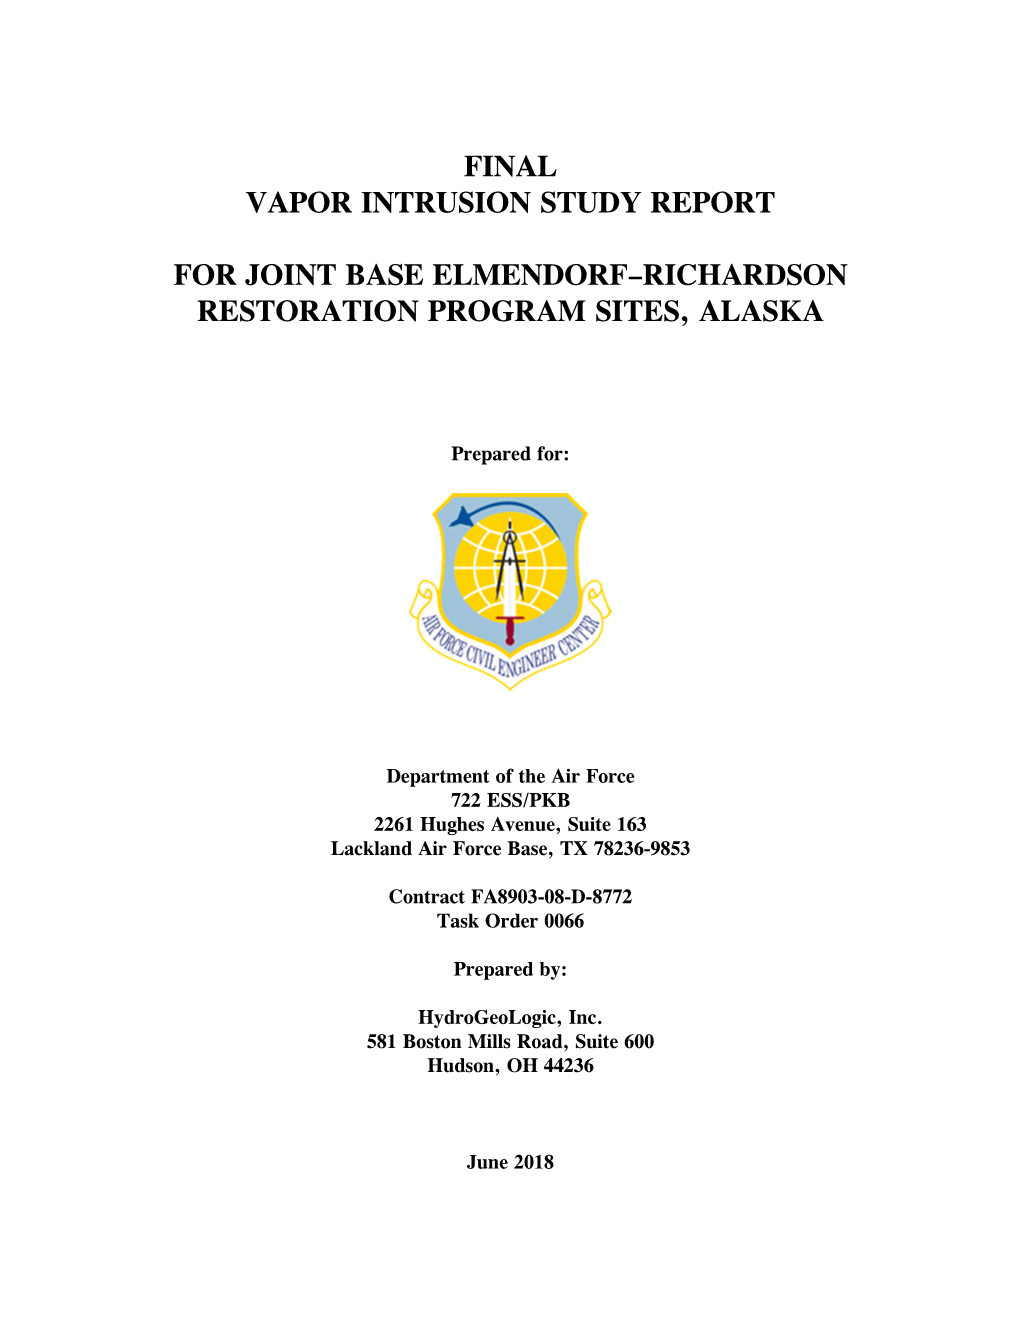 Final Vapor Intrusion Study Report for Joint Base Elmendorf–Richardson Restoration Program Sites, Alaska